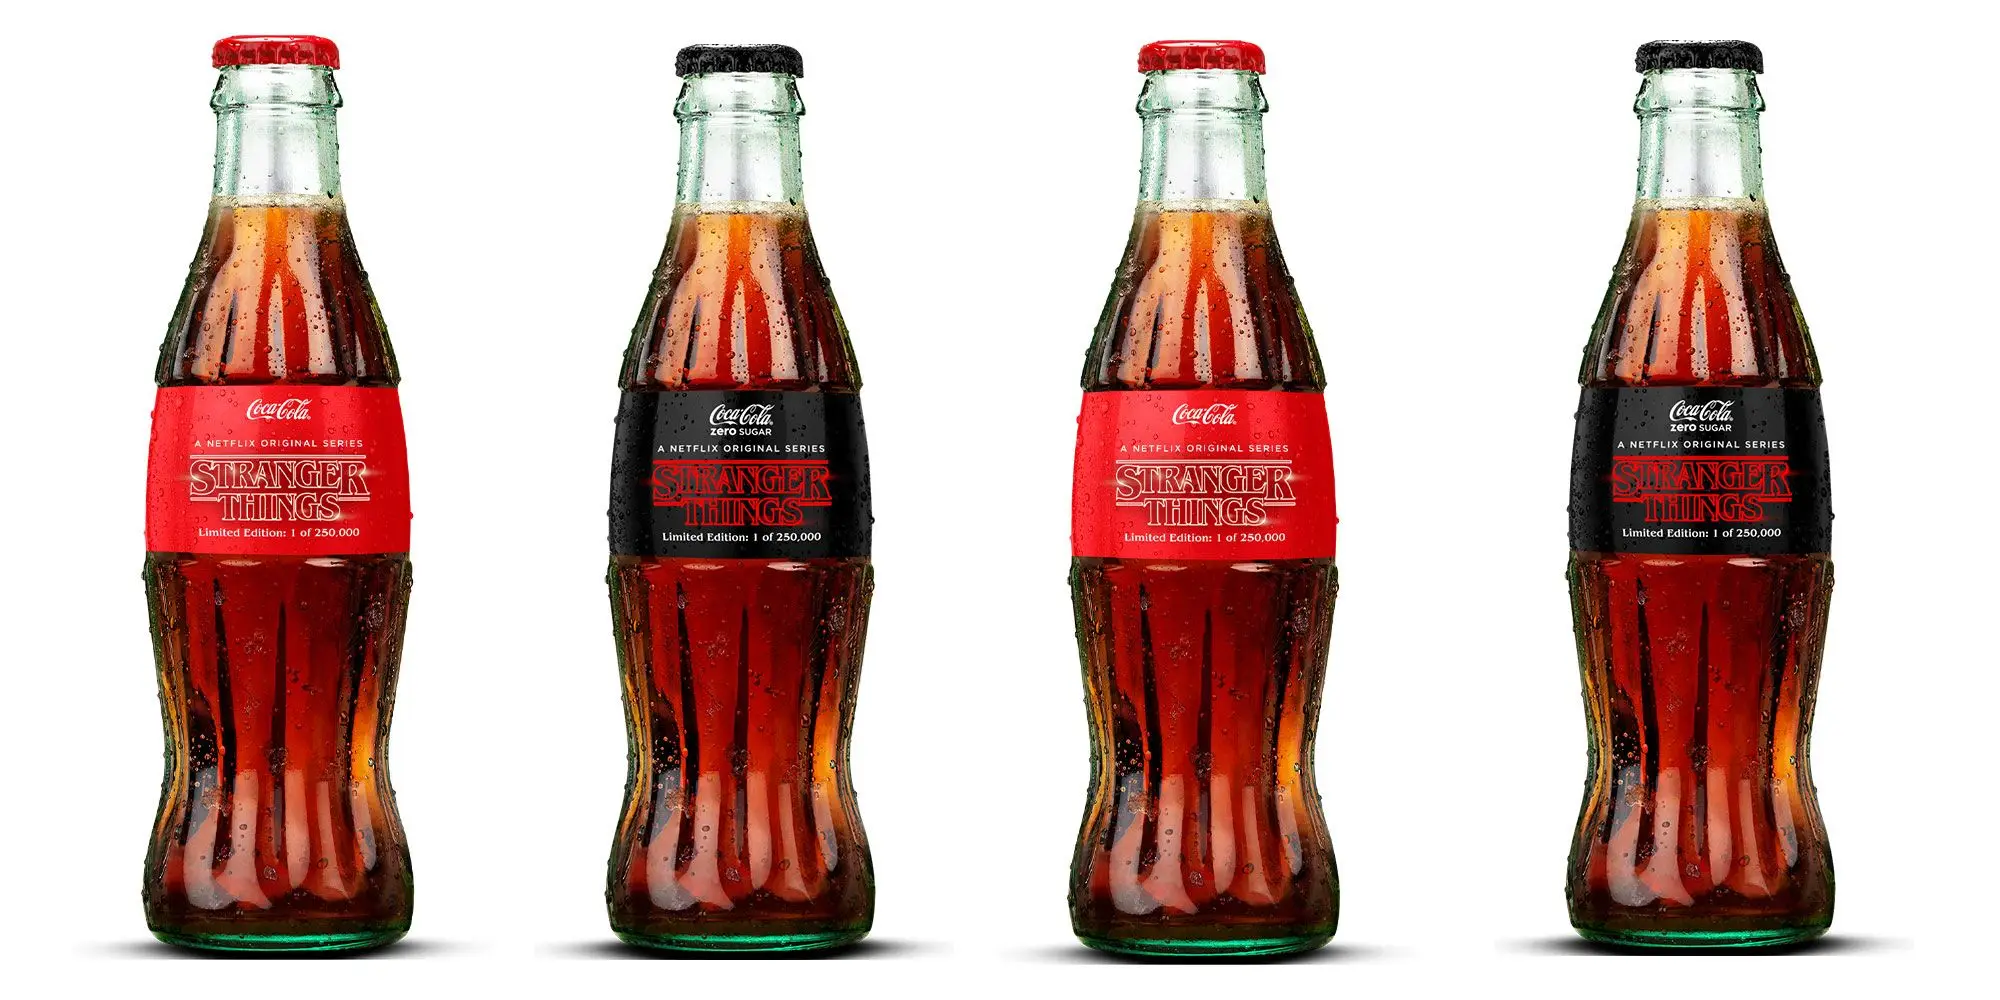 Like x cola. Coca Cola stranger things. Кока кола очень странные дела. New Coke очень странные дела. Кола Классик Лимитед.